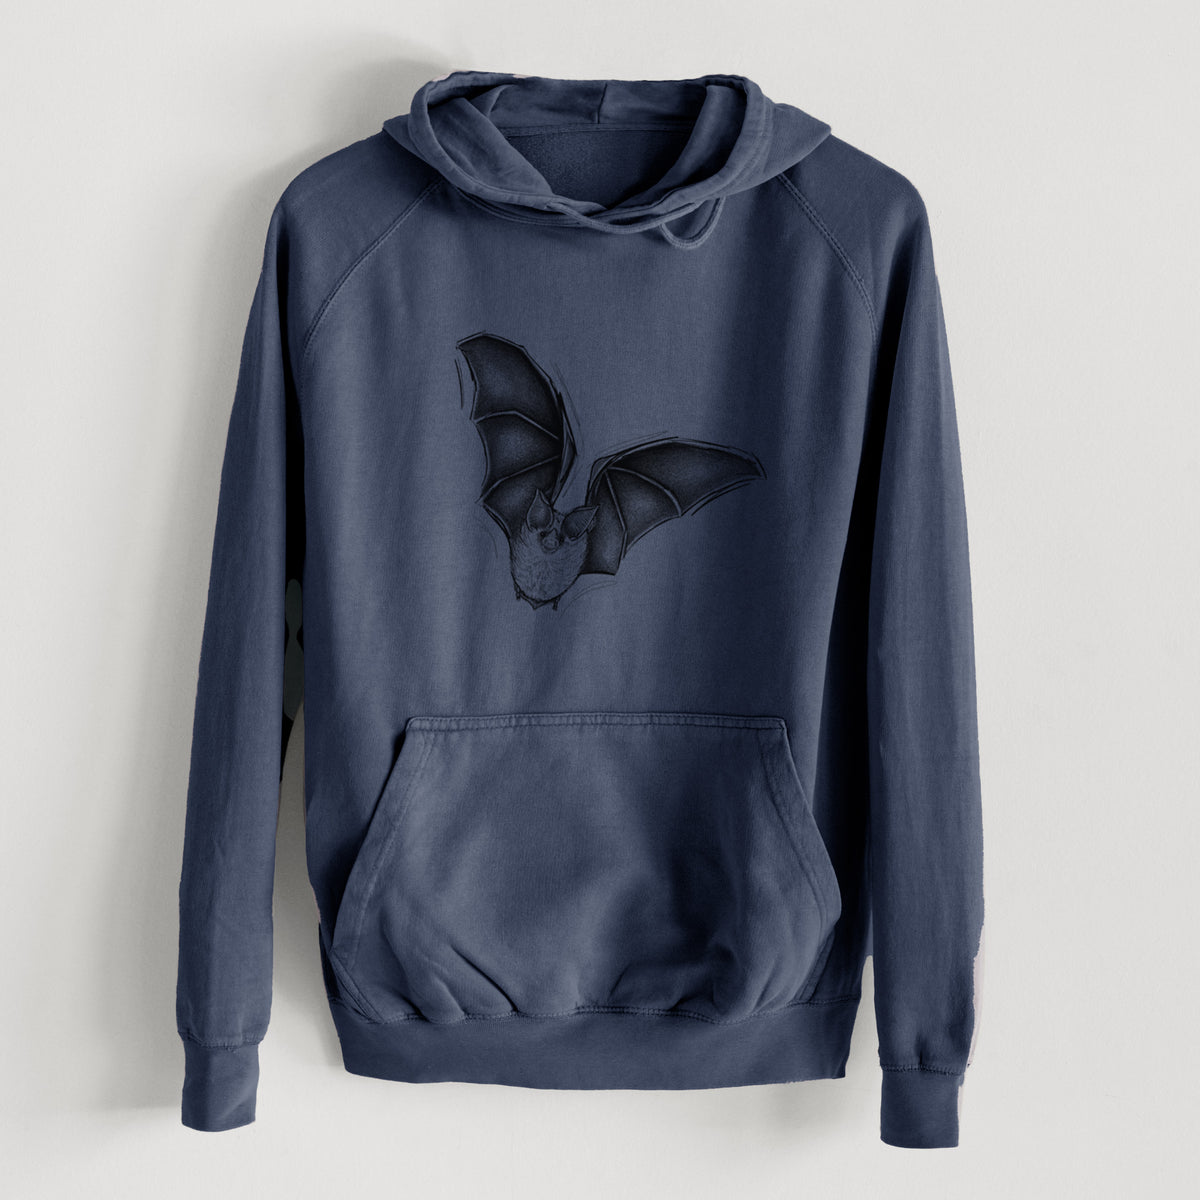 Macrotus californicus - California Leaf-nosed Bat  - Mid-Weight Unisex Vintage 100% Cotton Hoodie